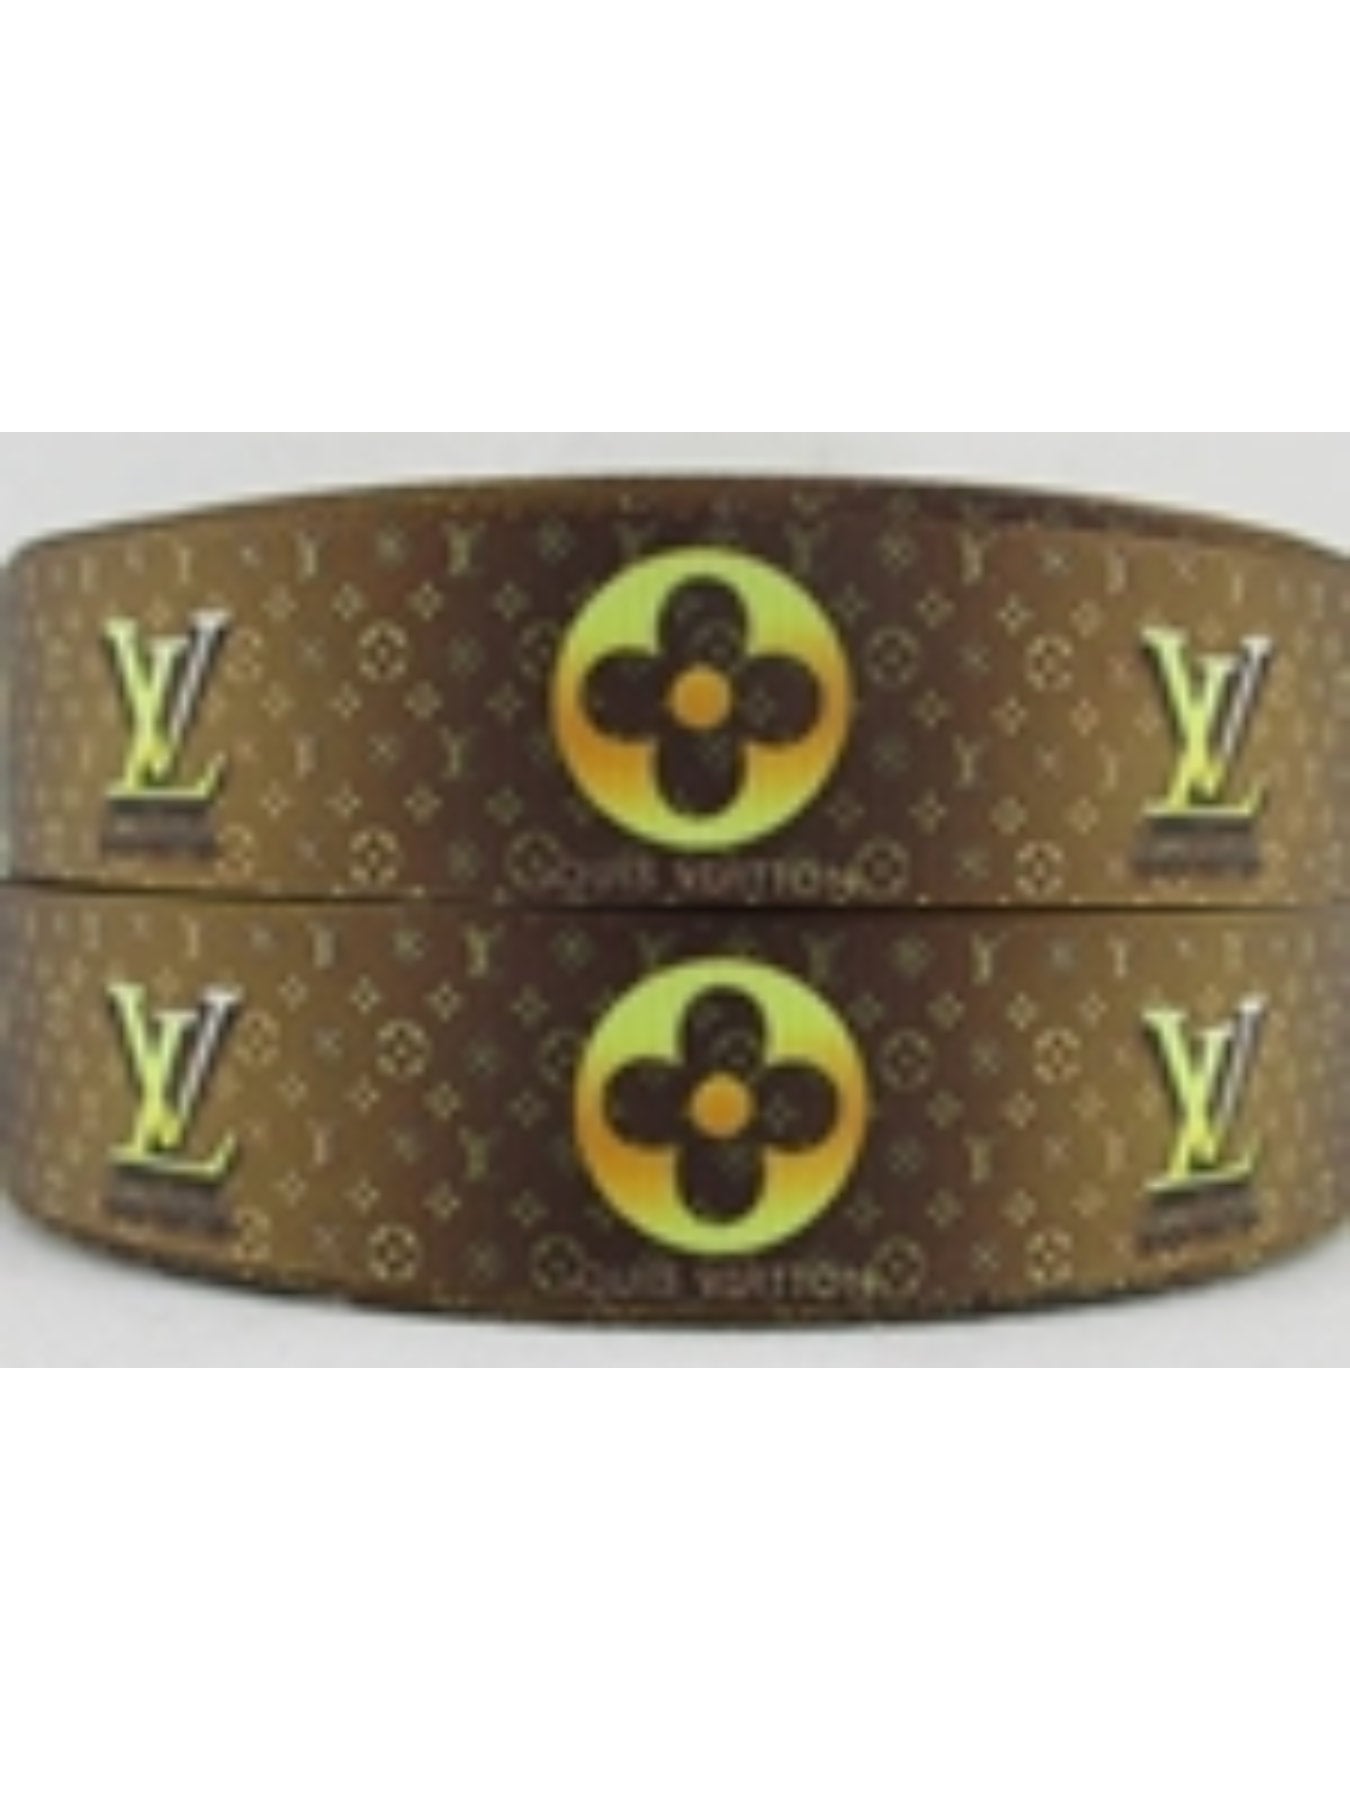 1 Louis Vuitton LV Grosgrain Ribbon from RibbonsWonderland on